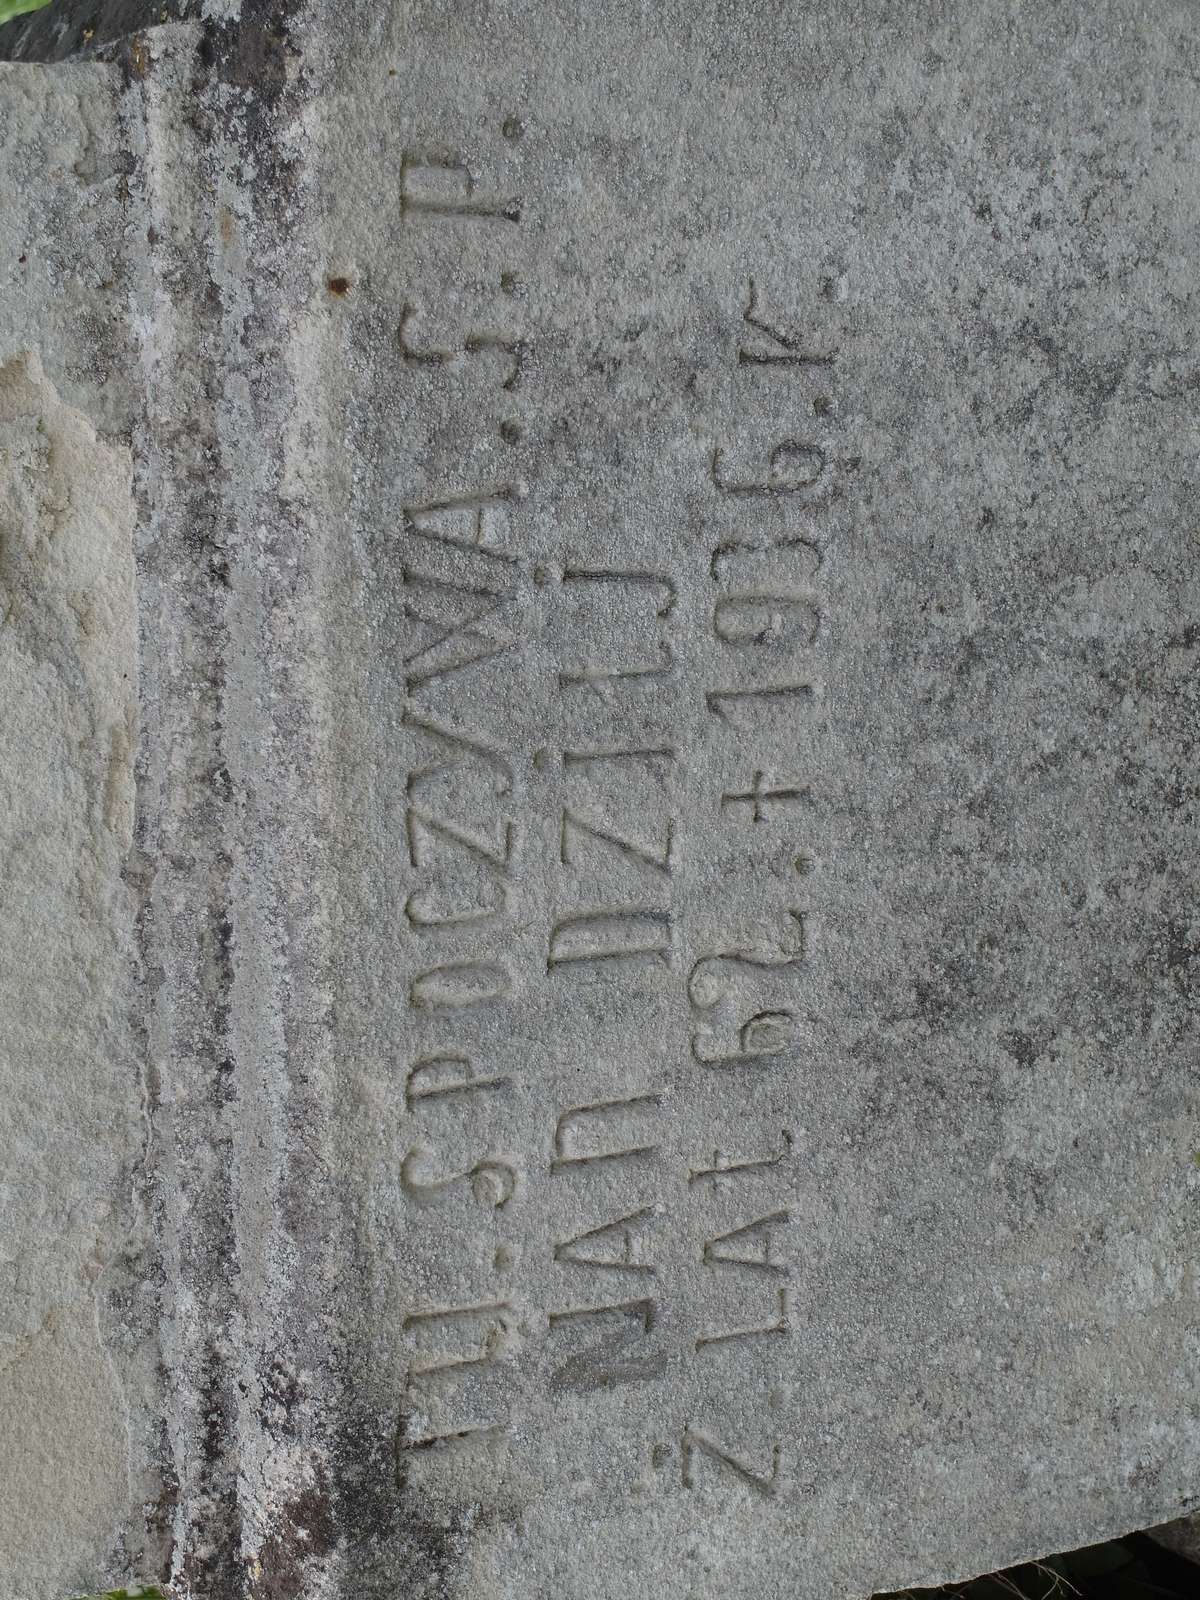 Tombstone of Nan Dzilj, Zbarazh cemetery, as of 2018.